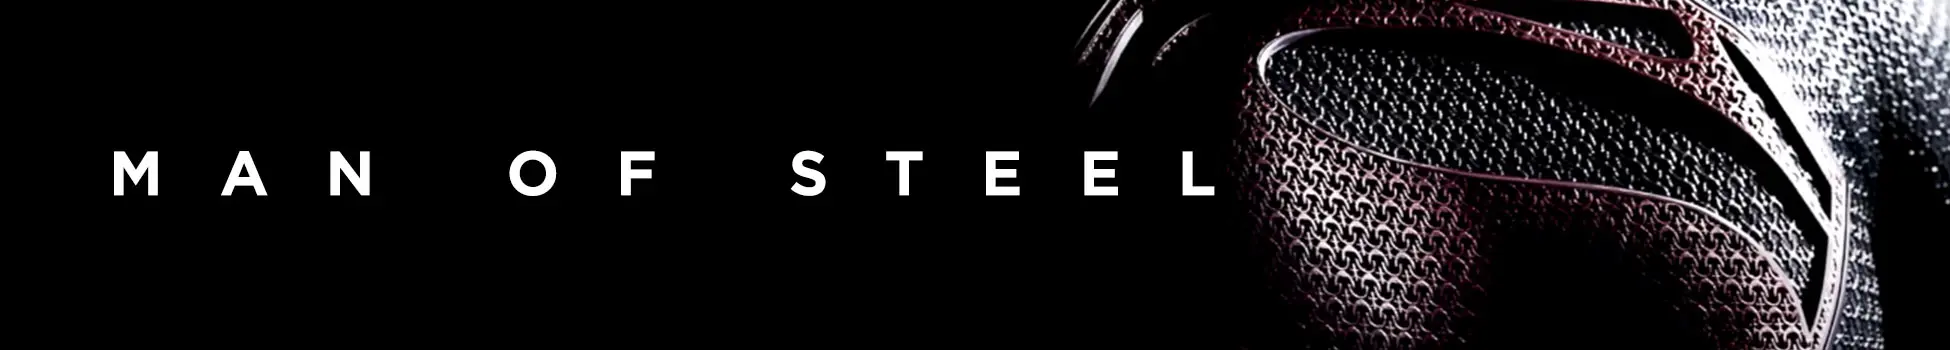 Man of Steel - Artwork - Key Visual - Header